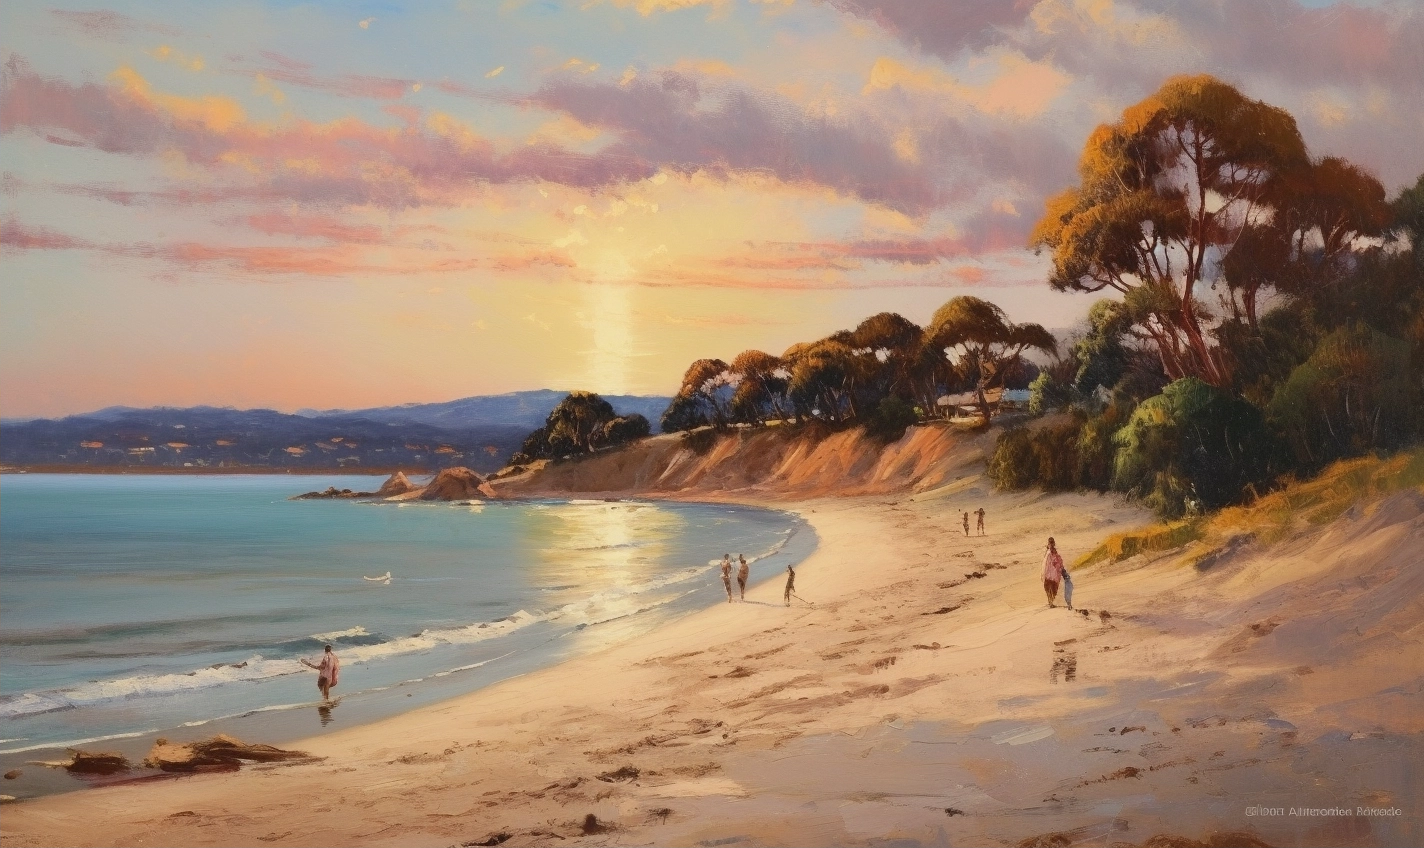 xgibson_Generate_a_small_Australian_impressionist_oil_painting__32b34d17-71f7-489c-8c90-a1a6ecc6207c_2.png